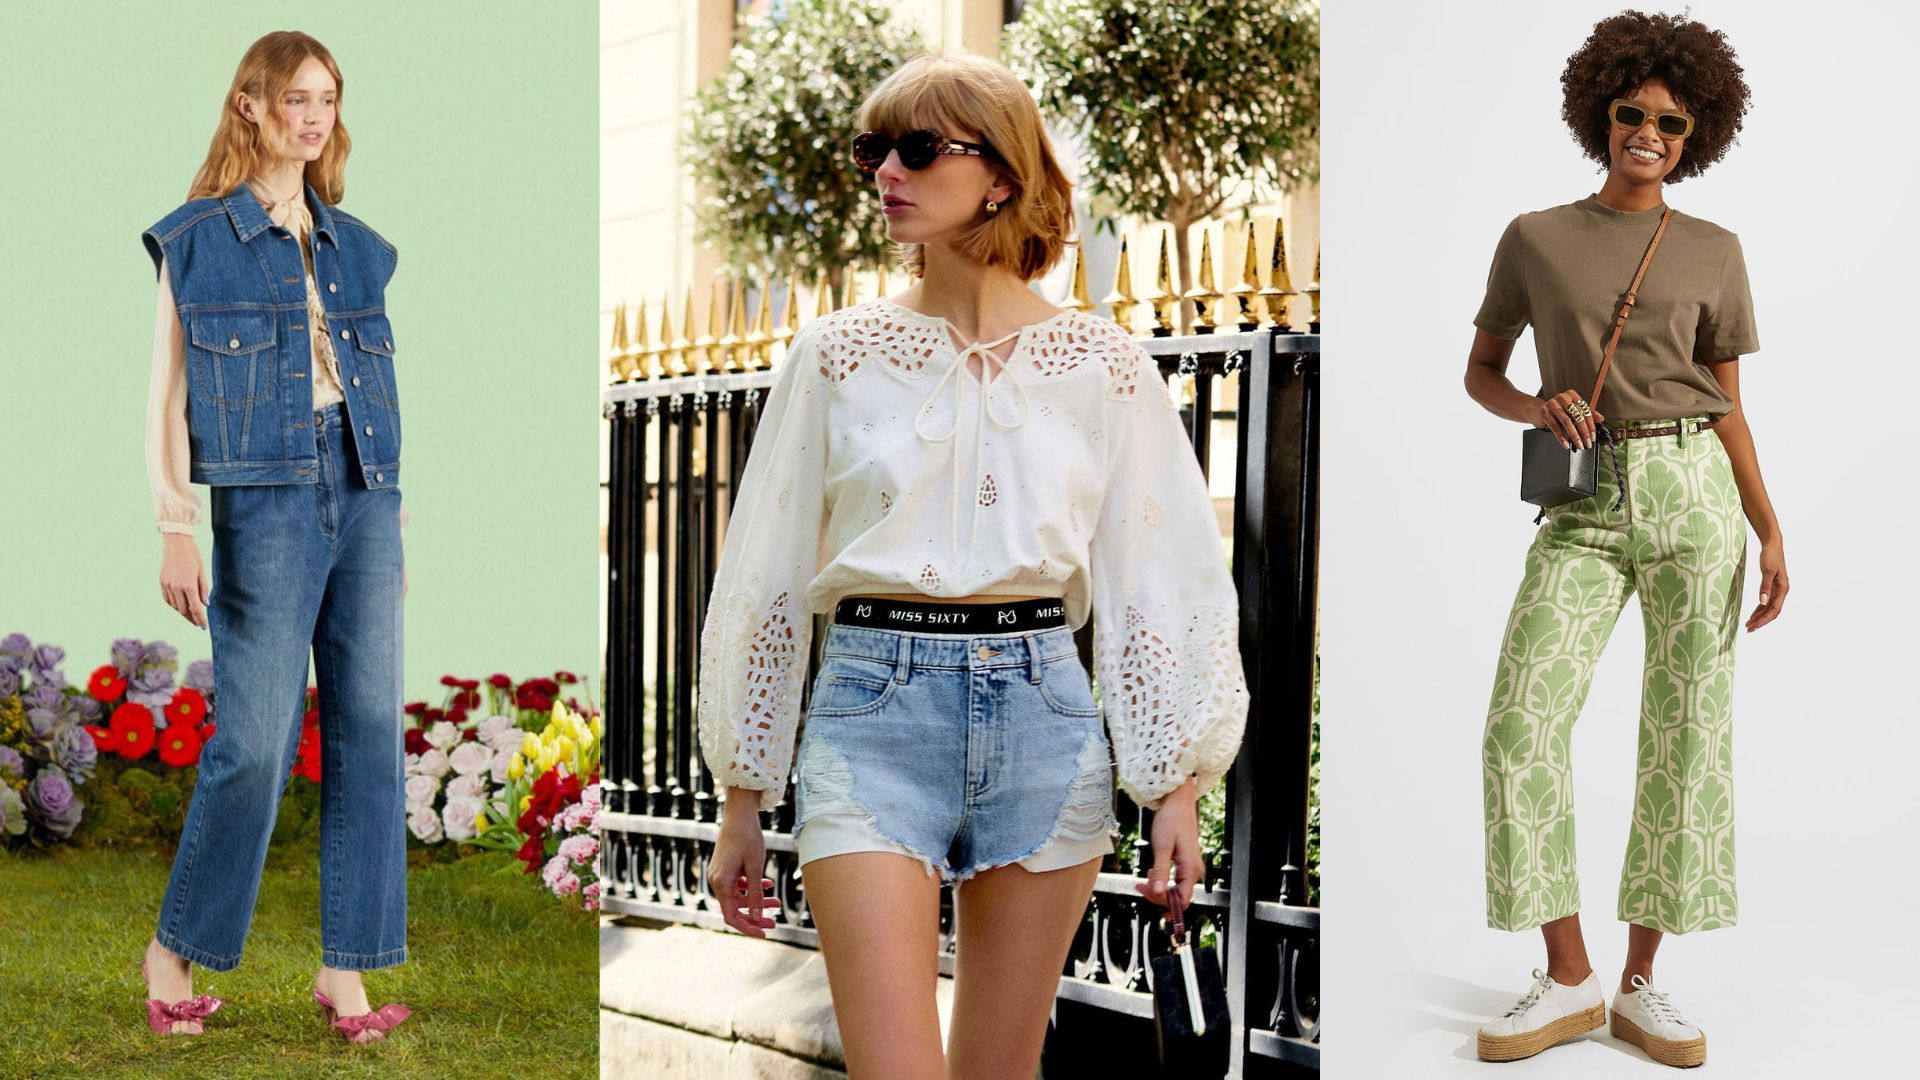 White Colored Chiffon Summer Crop Top / Tshirt For Women - Multisize, Fashion